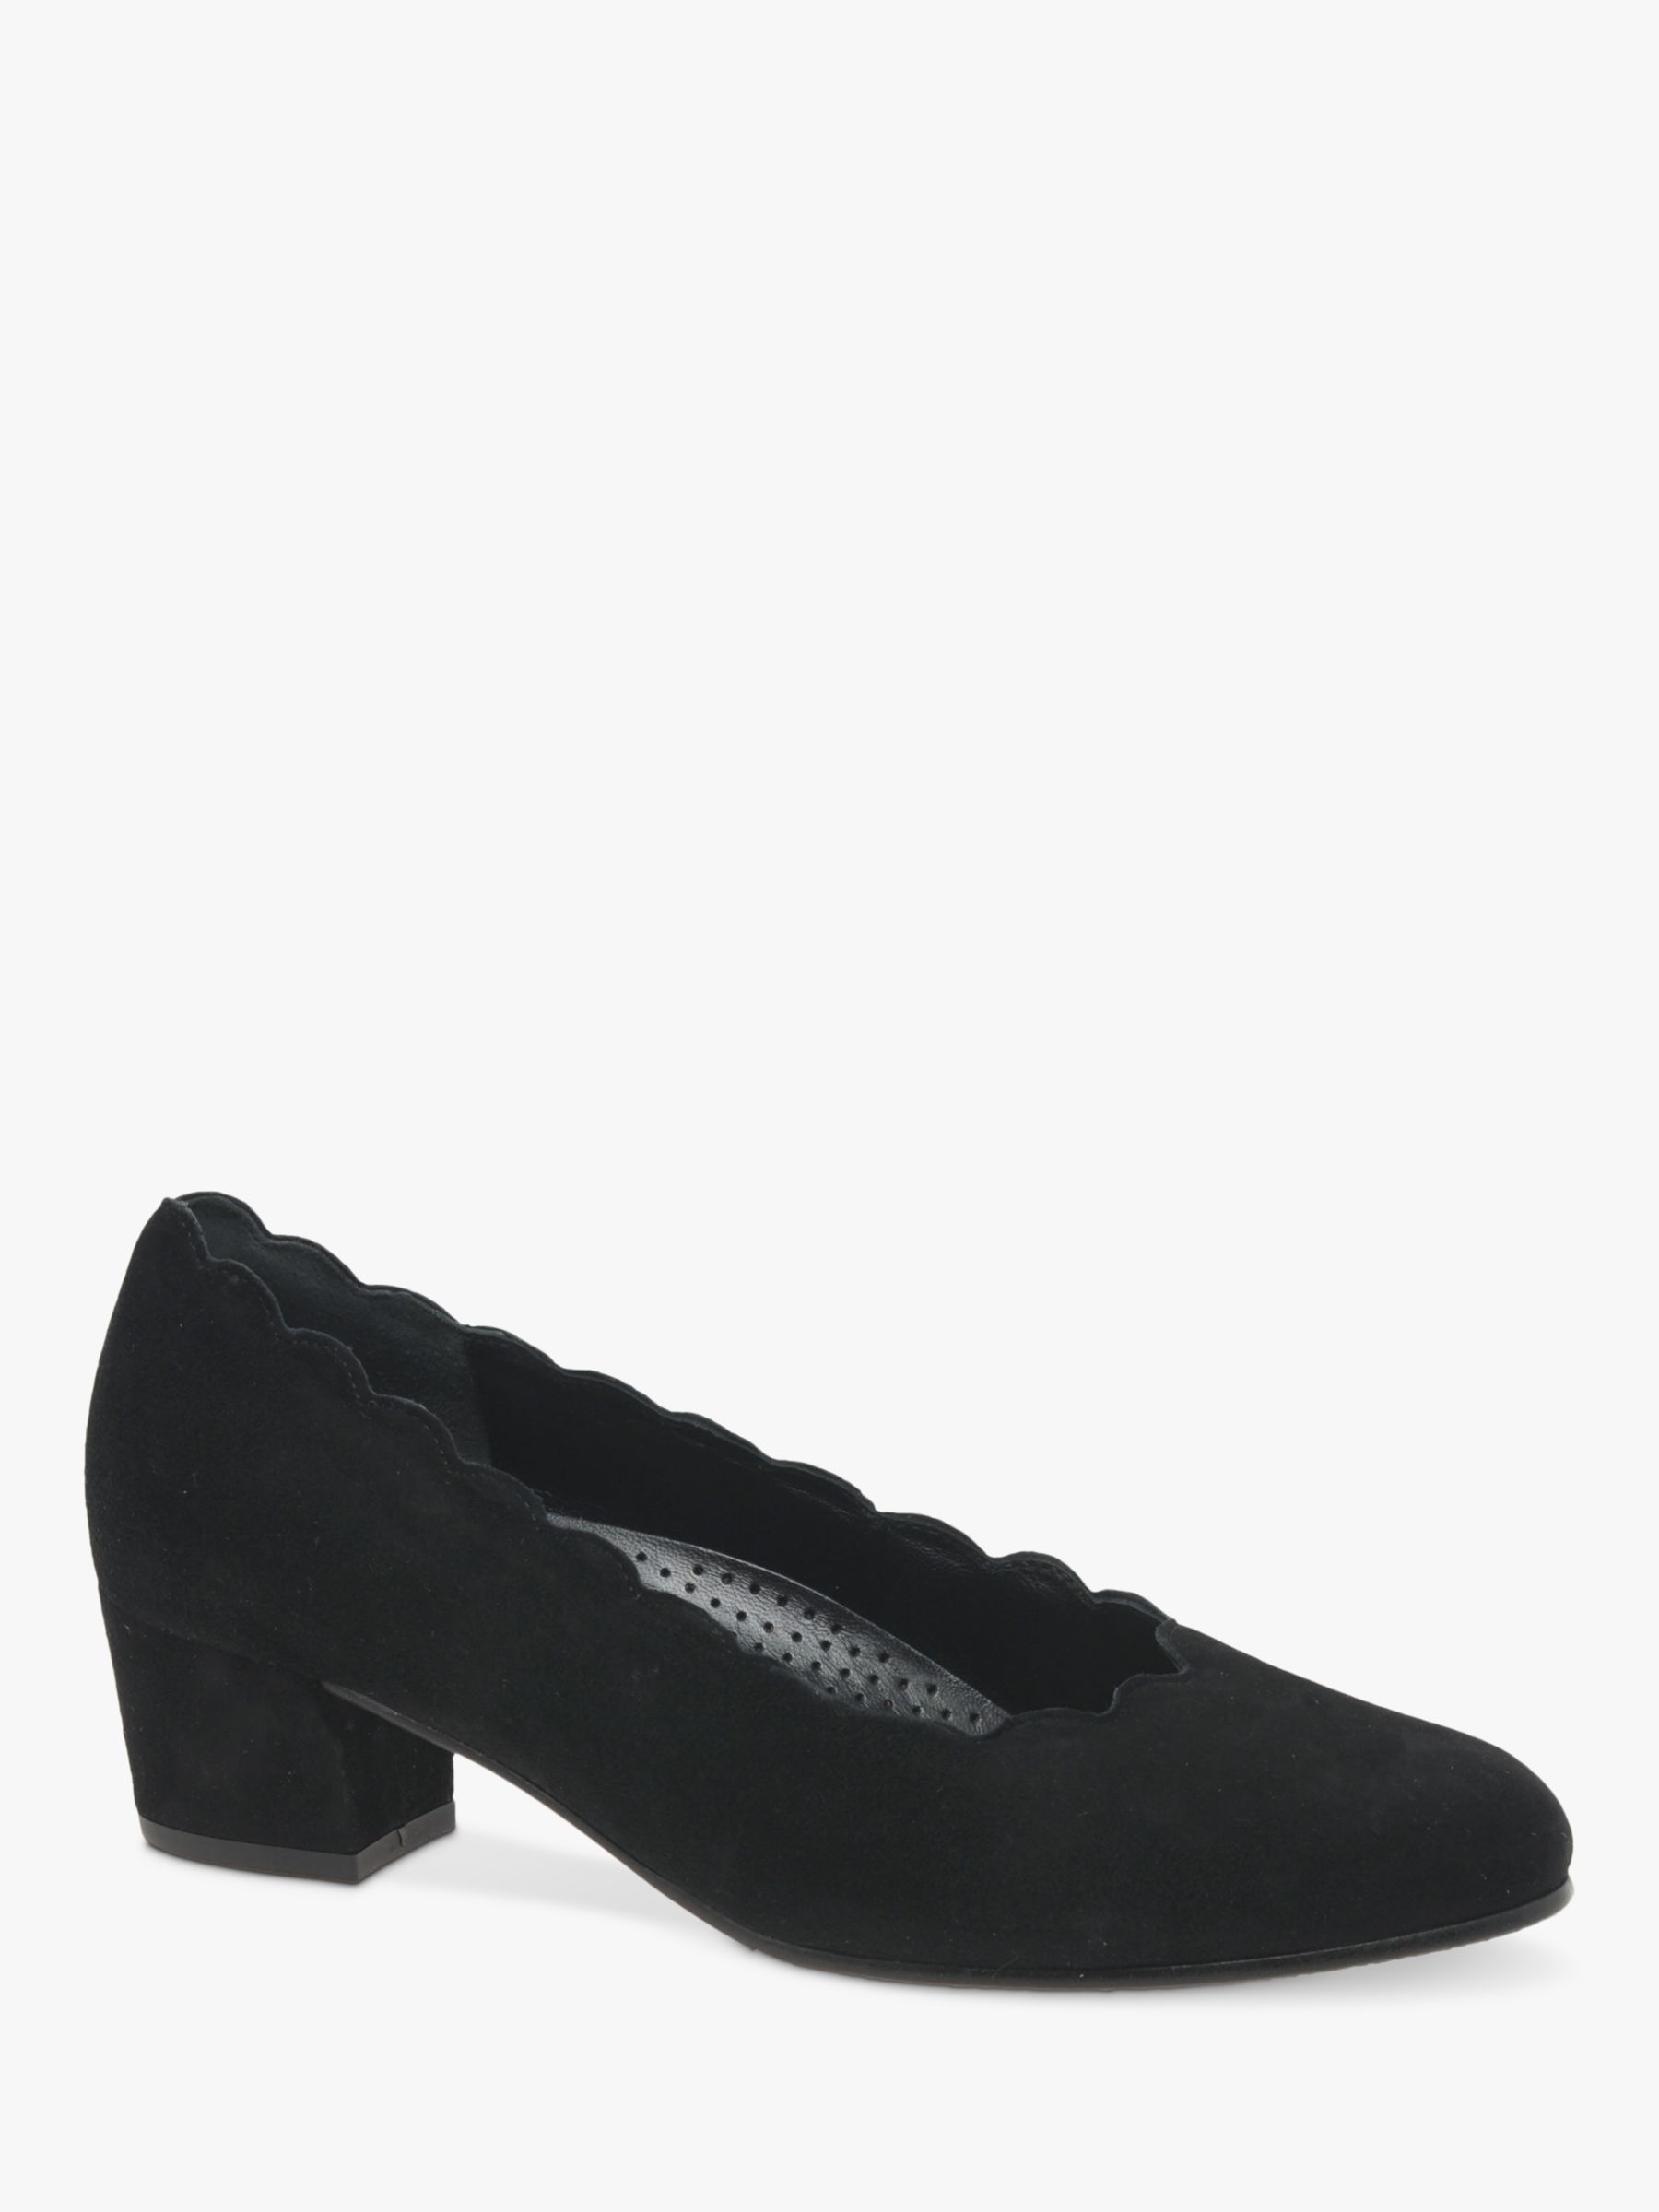 Women's Shoes - Court Shoes, Low Heel | John Lewis & Partners